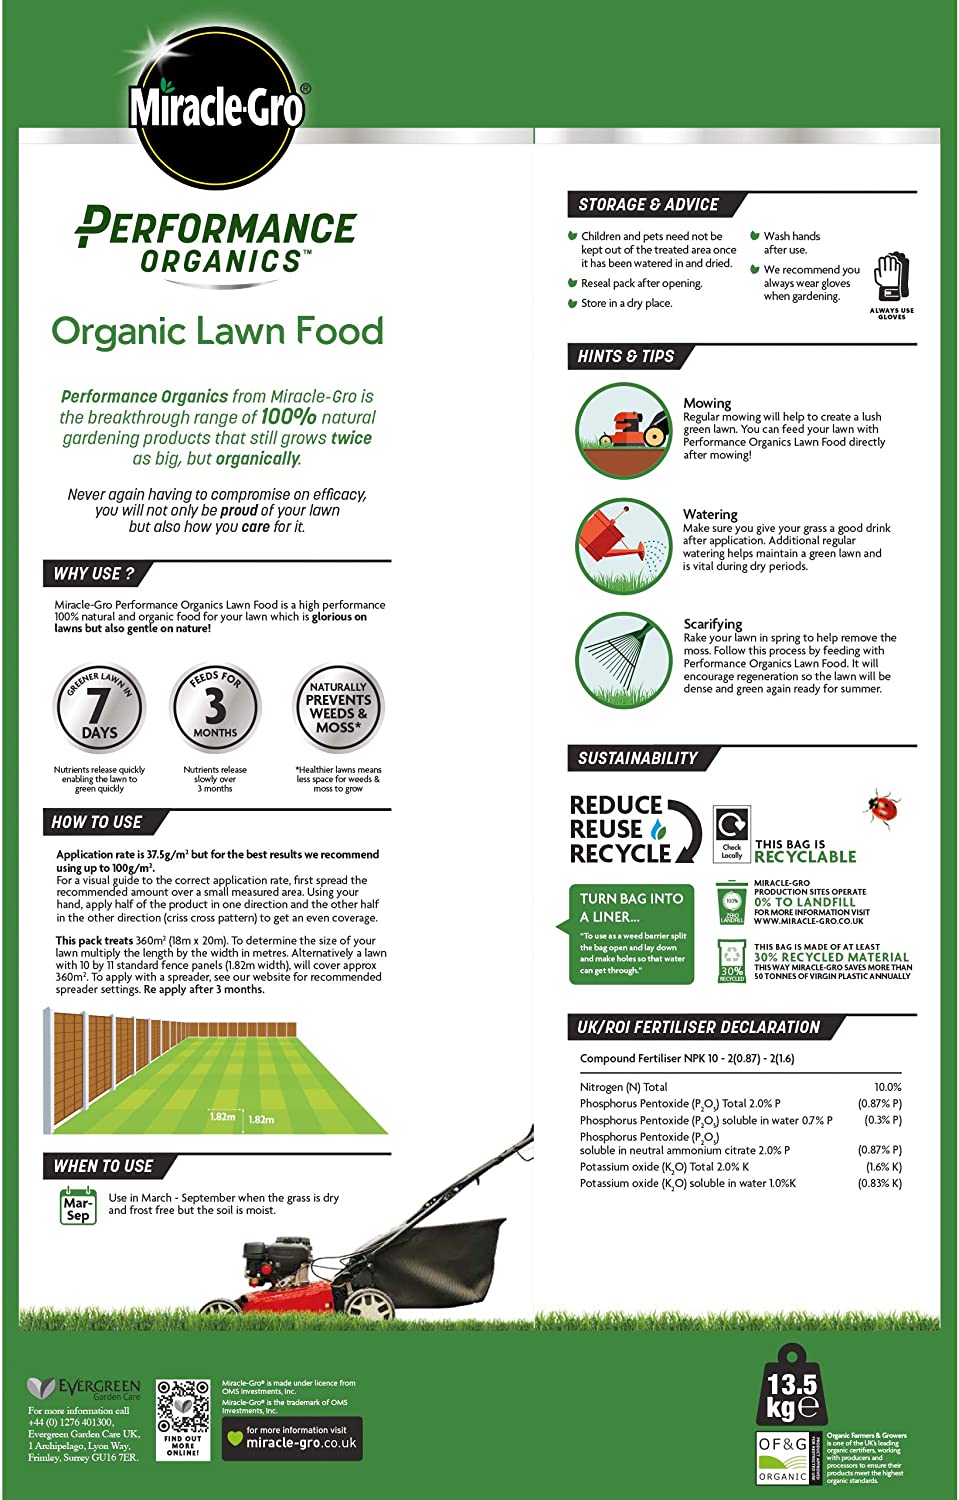 Miracle-Gro Performance Organics Organic Lawn Food 360M2 Coverage